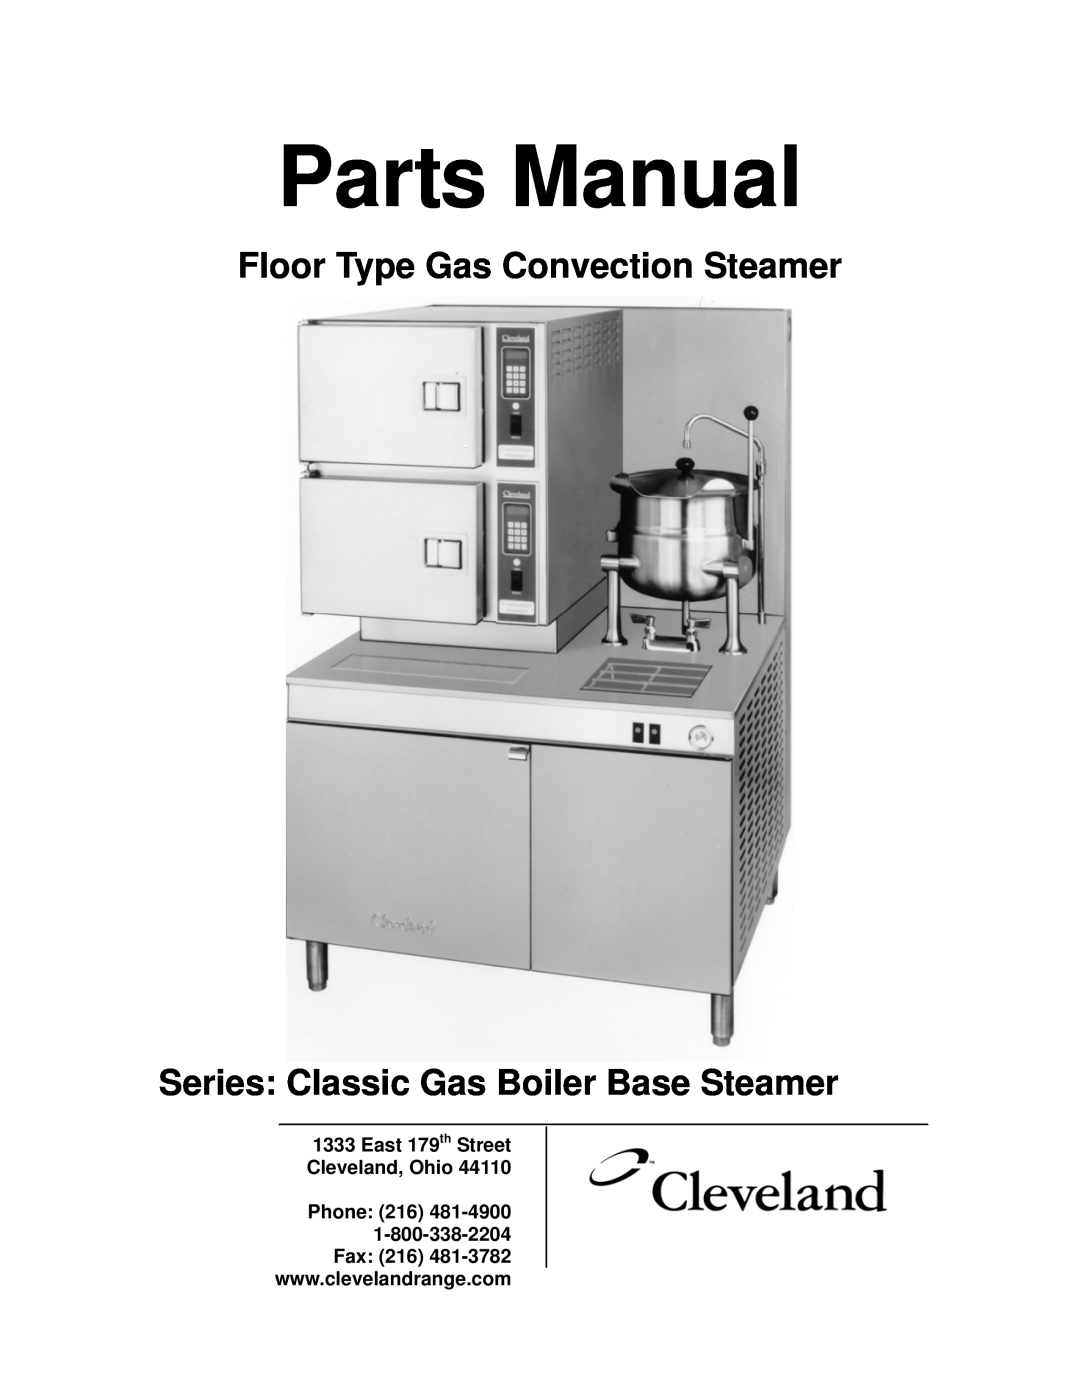 Cleveland Range KE50151-E manual Parts Manual, Floor Type Gas Convection Steamer, Series: Classic Gas Boiler Base Steamer 